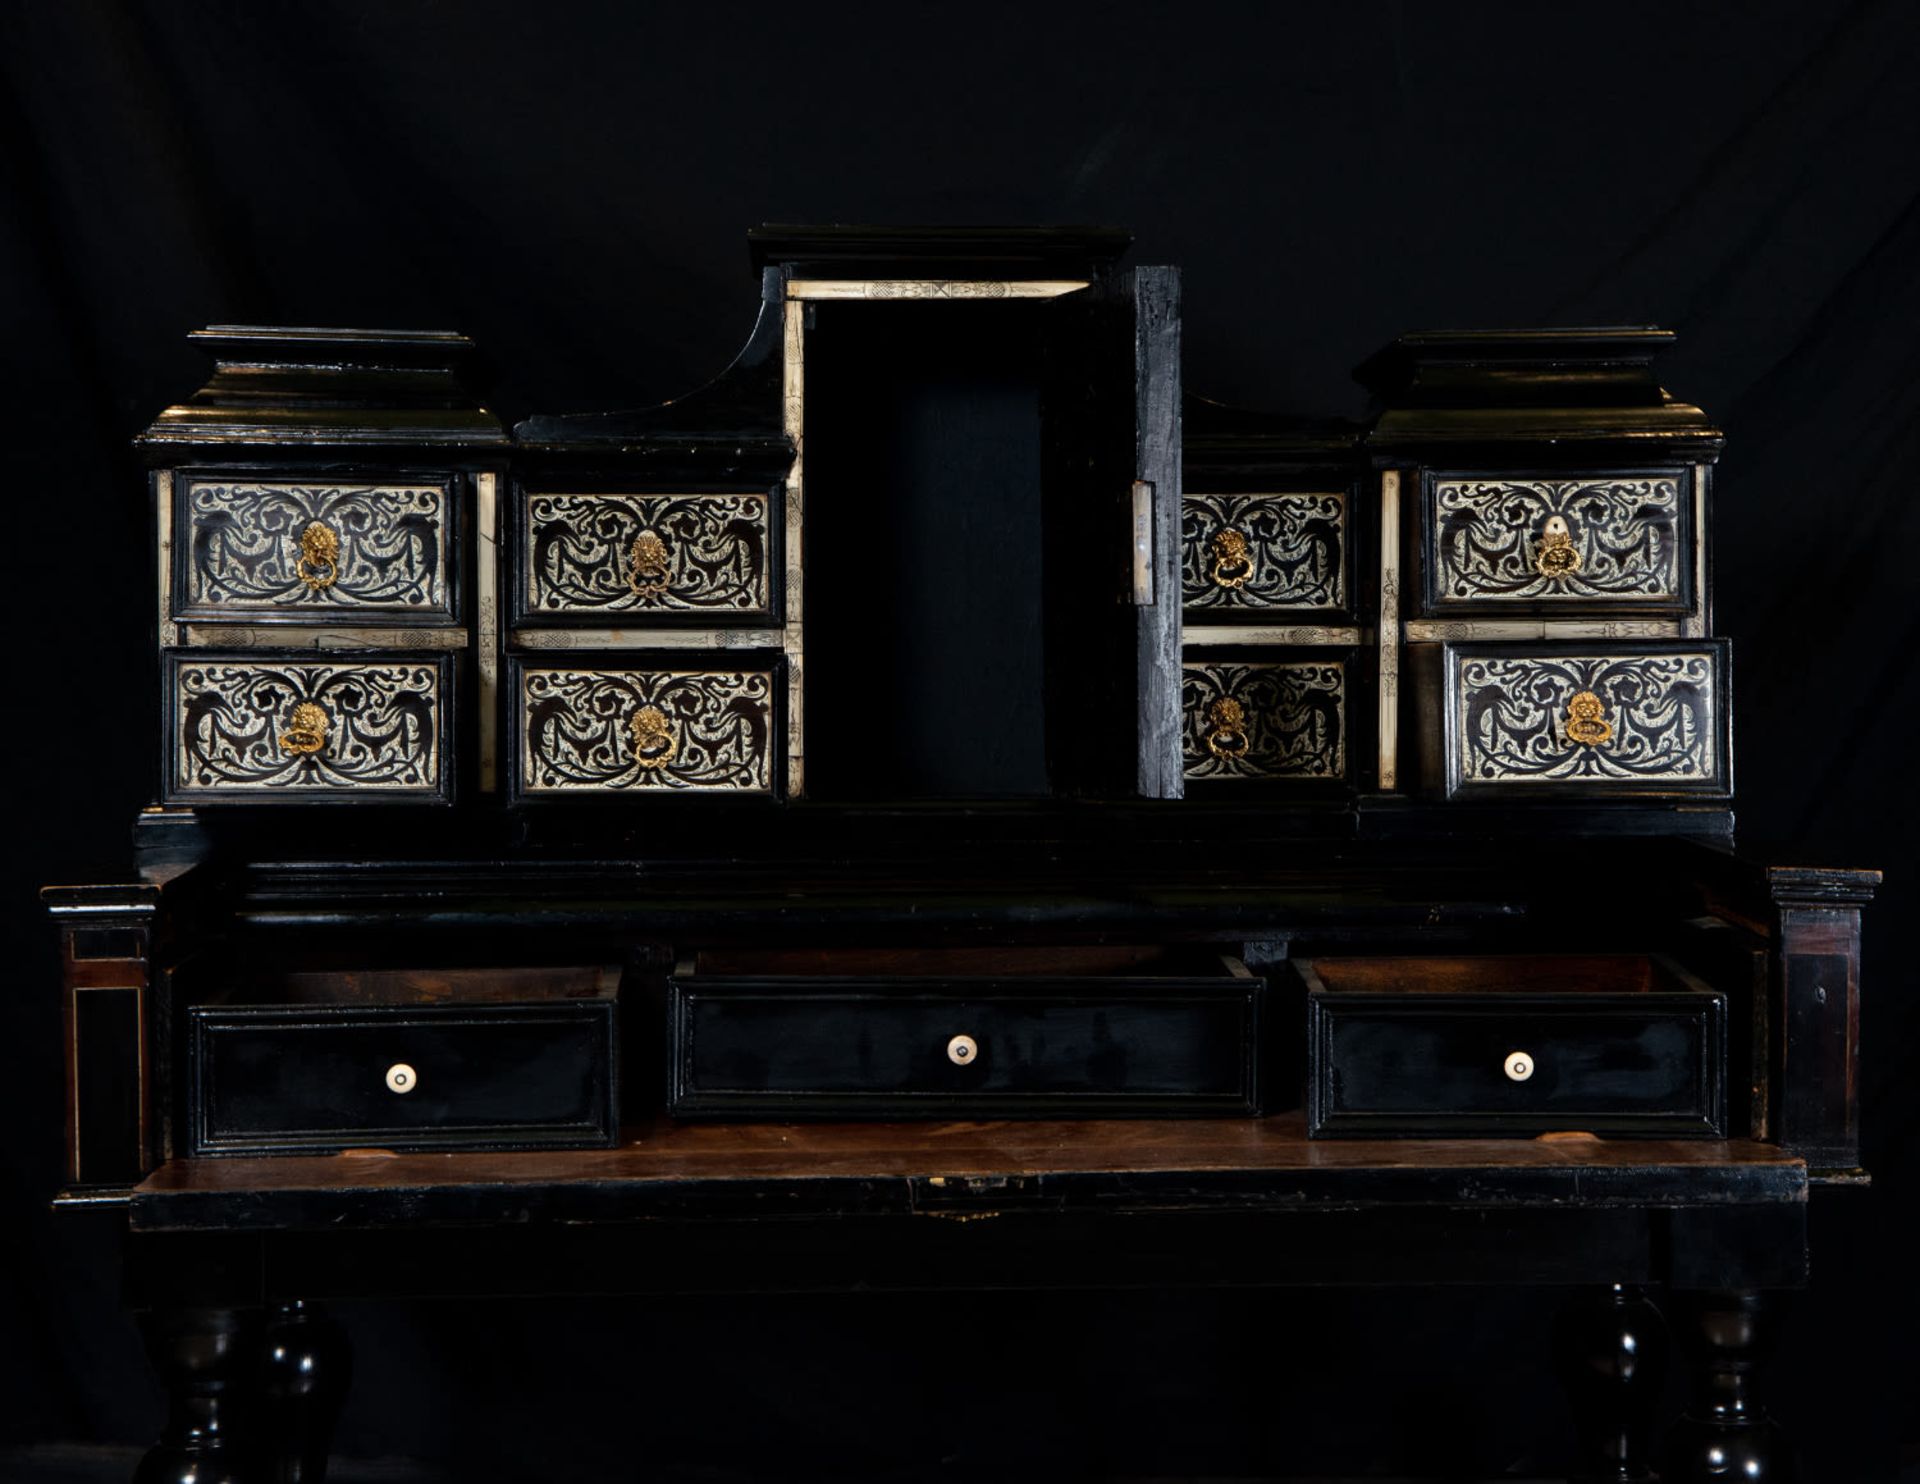 Important Florentine Desk in Ebonized Wood, Rosewood and bone inlays, 18th century Italian work - Image 6 of 10